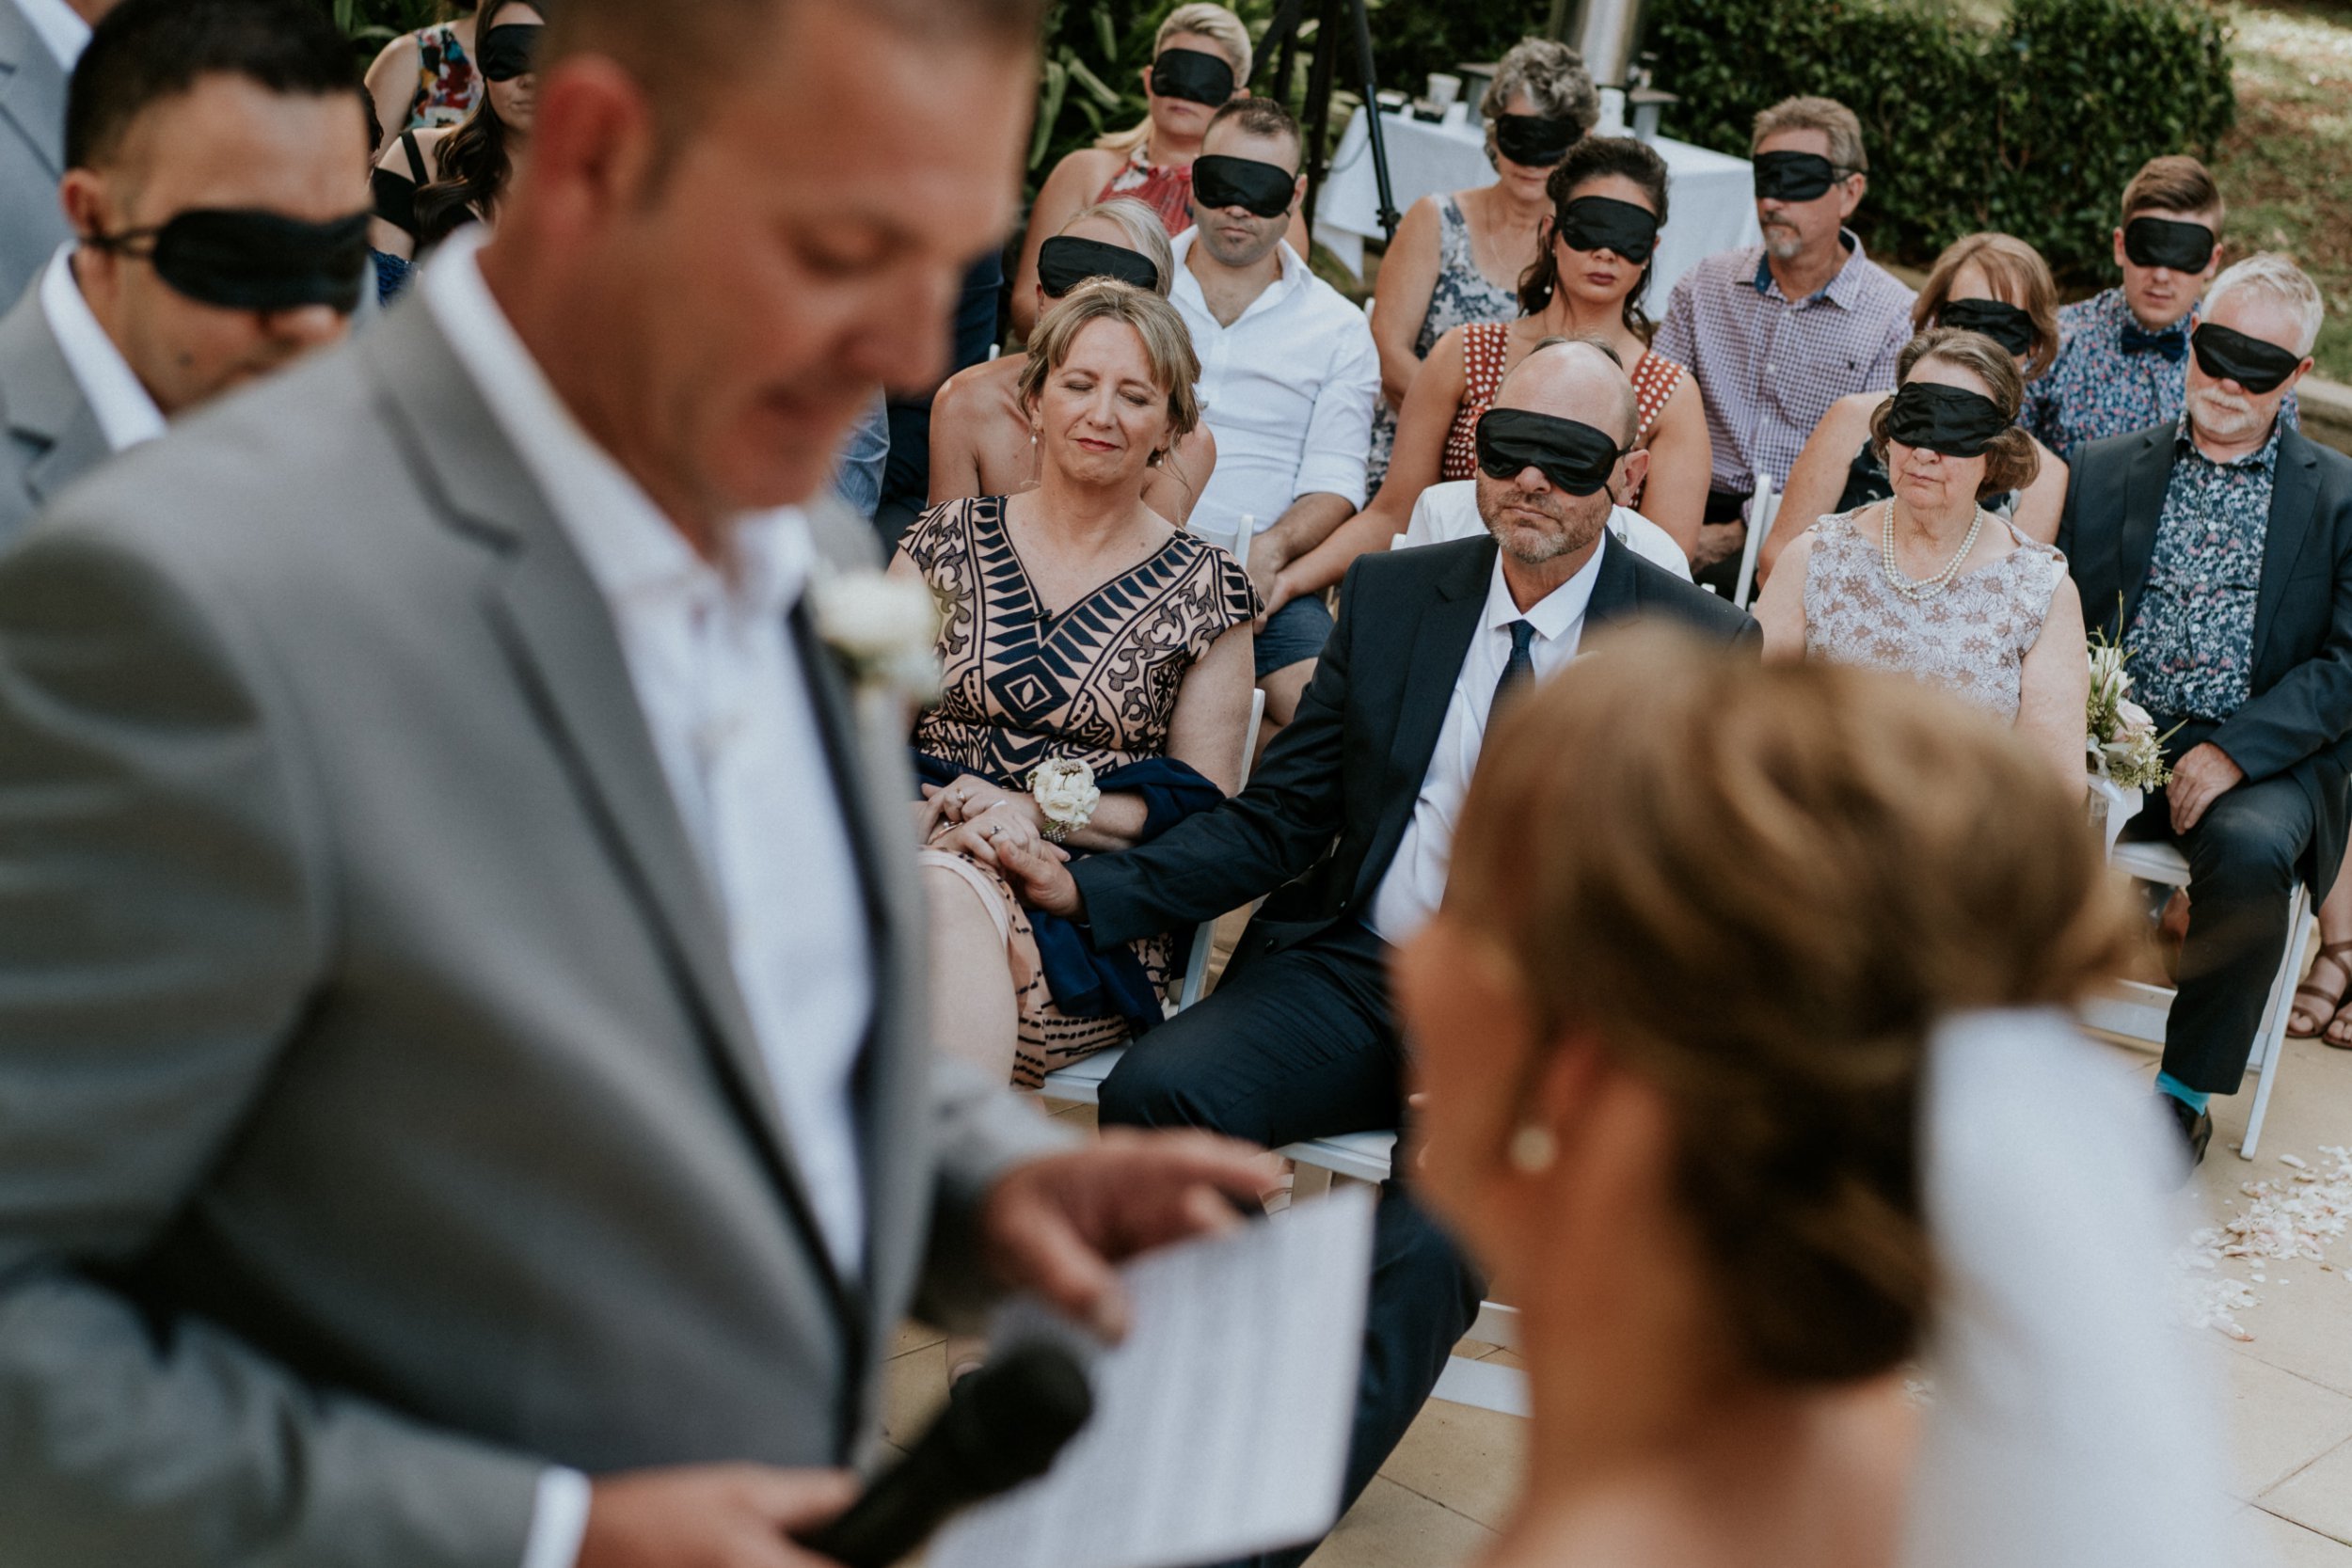 Wedding guests wear blindfolds at blind bride's wedding Mark Pawlyszyn